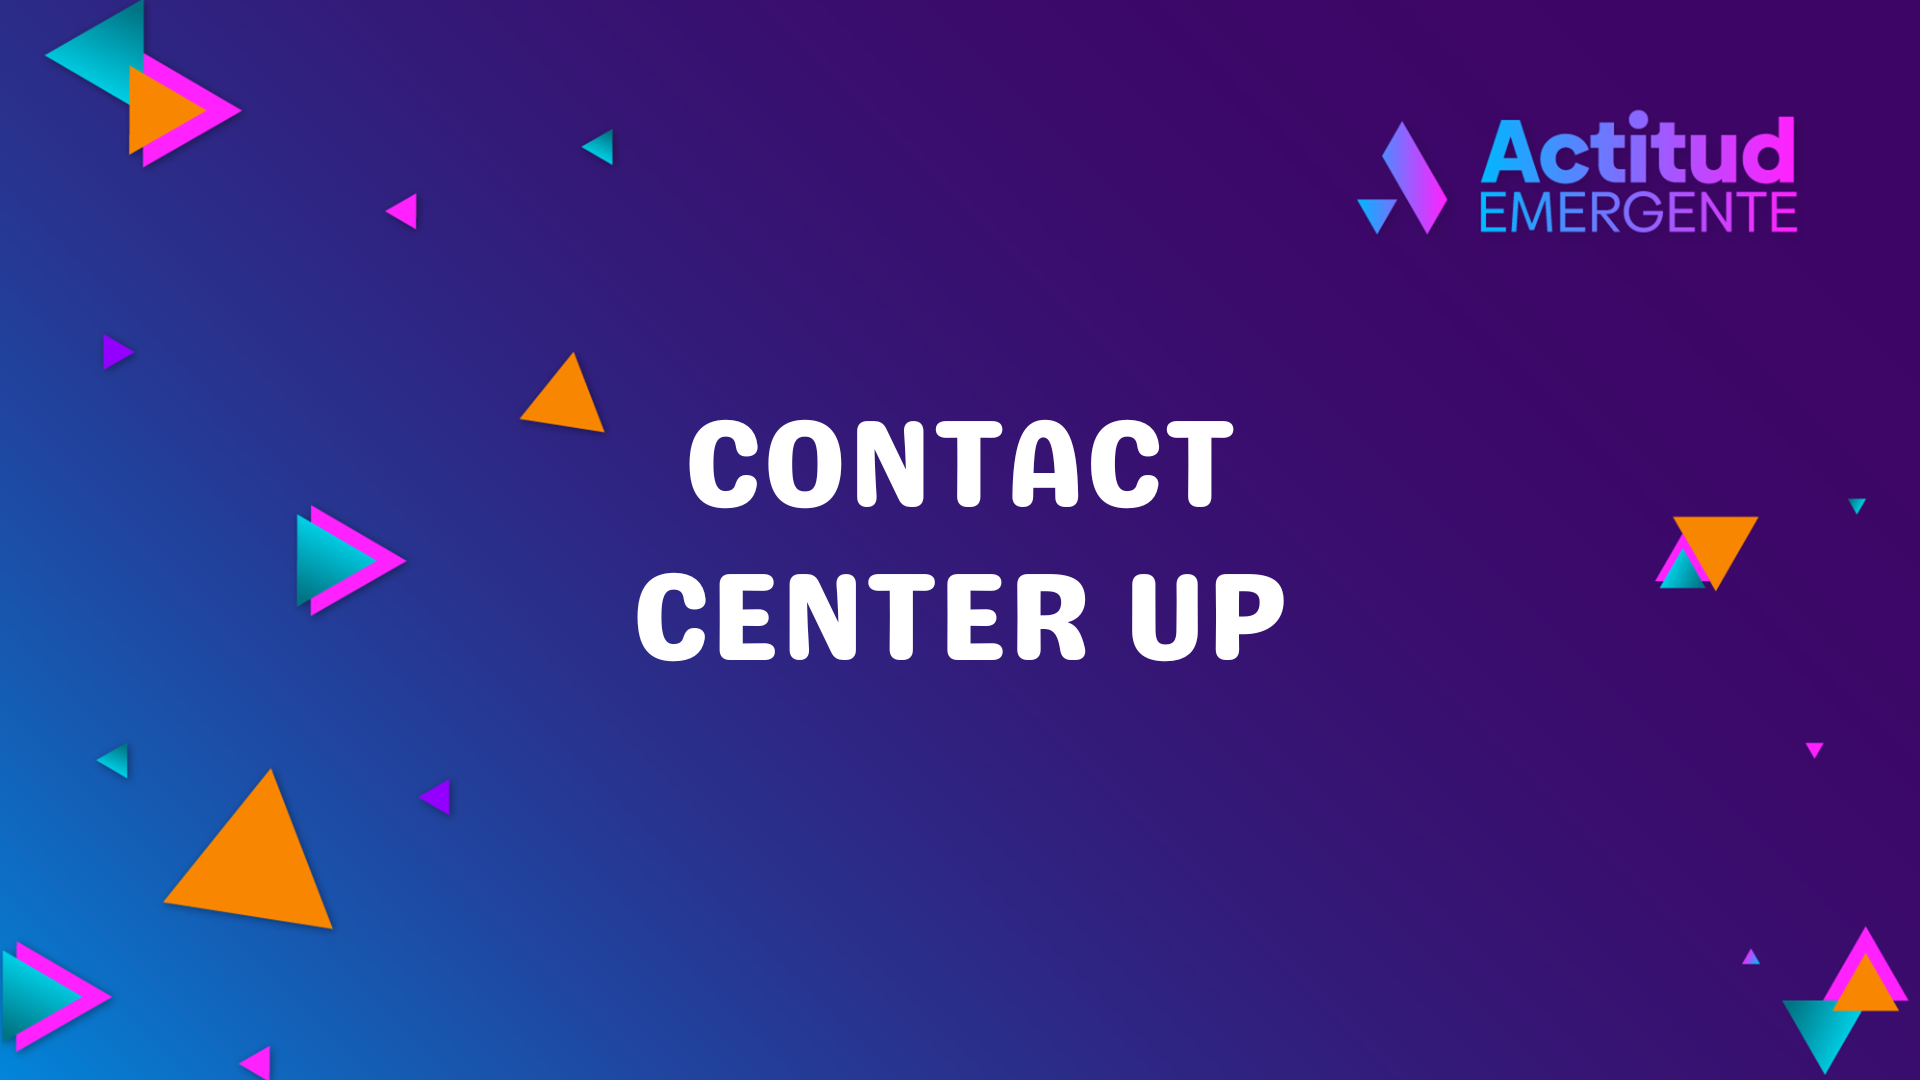 Contact Center UP